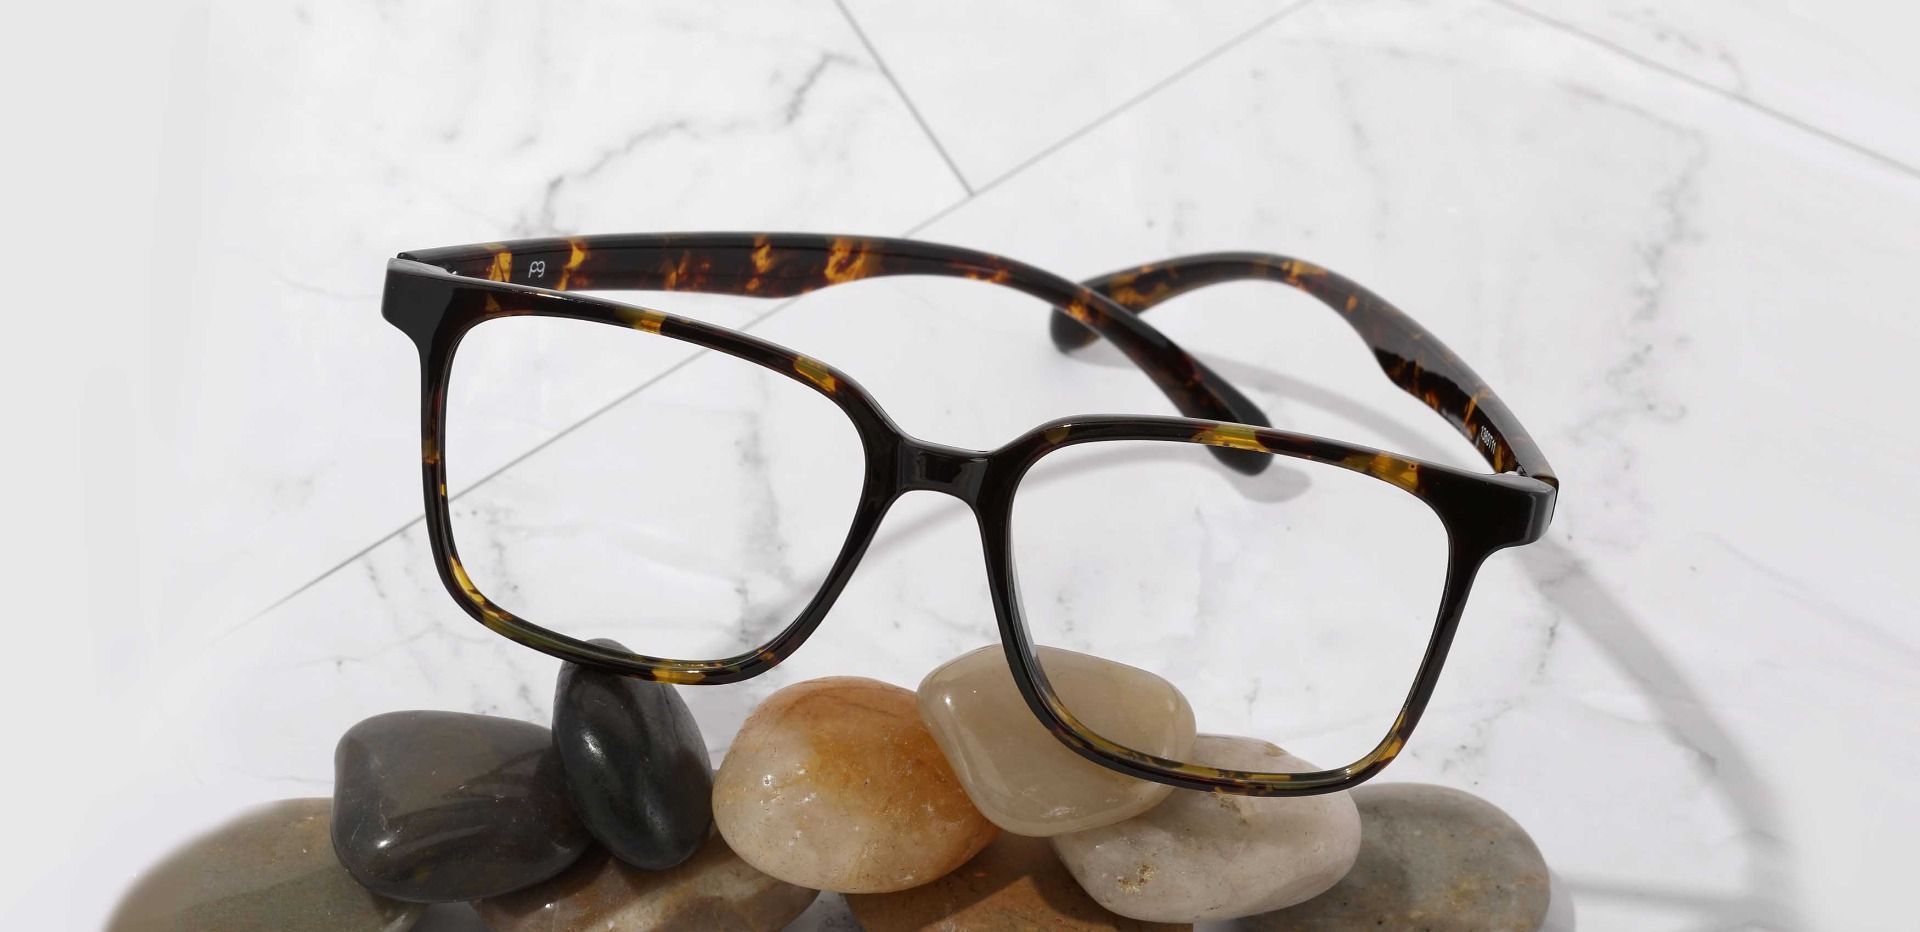 Kennett Square Prescription Glasses - Tortoise